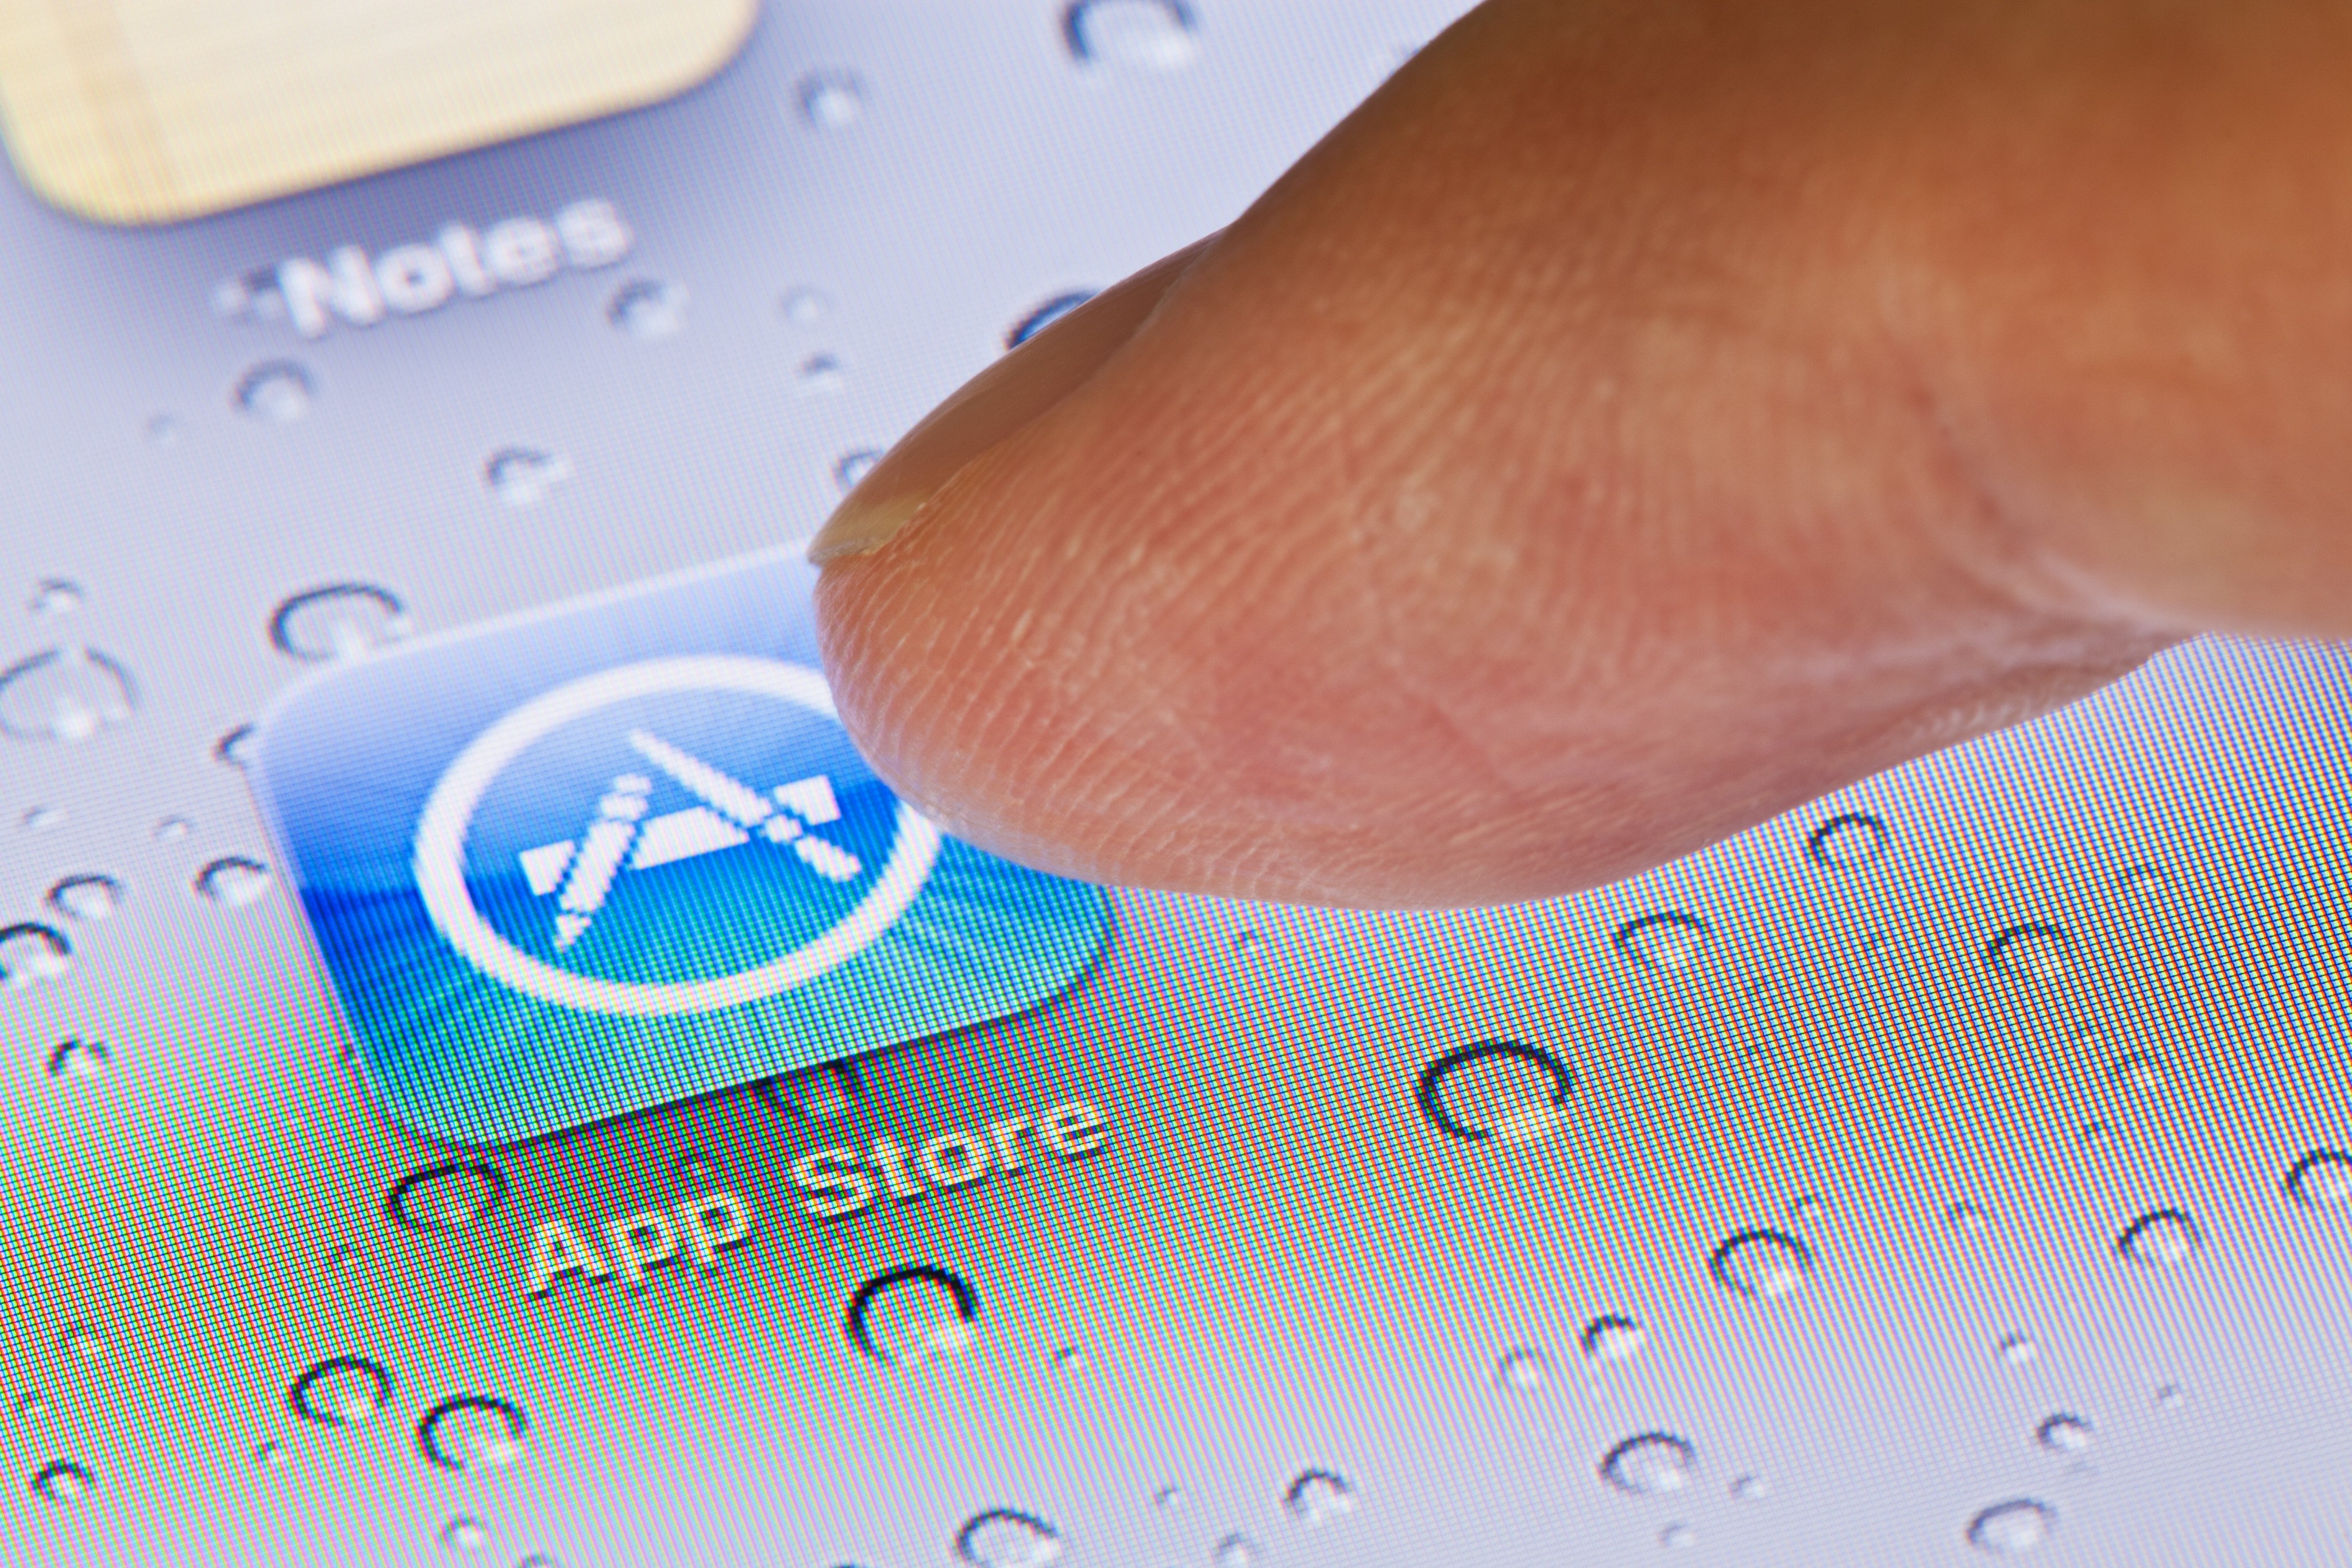 Apple’s App Store icon seen on an iPad screen. Photo: Shutterstock